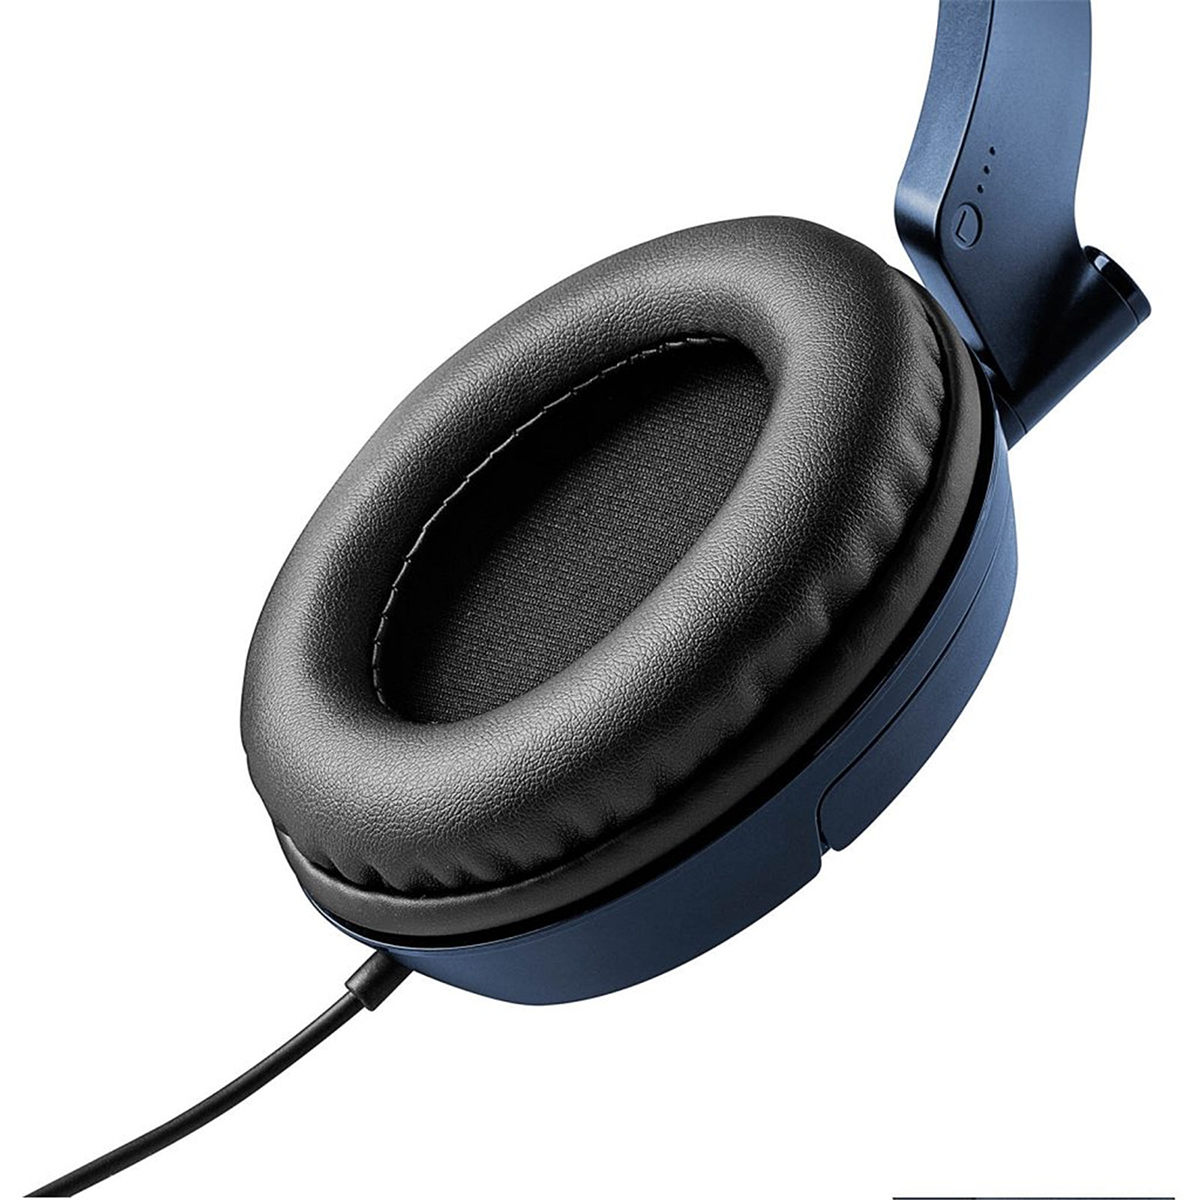 Edifier H840 Wired Blue Headphone